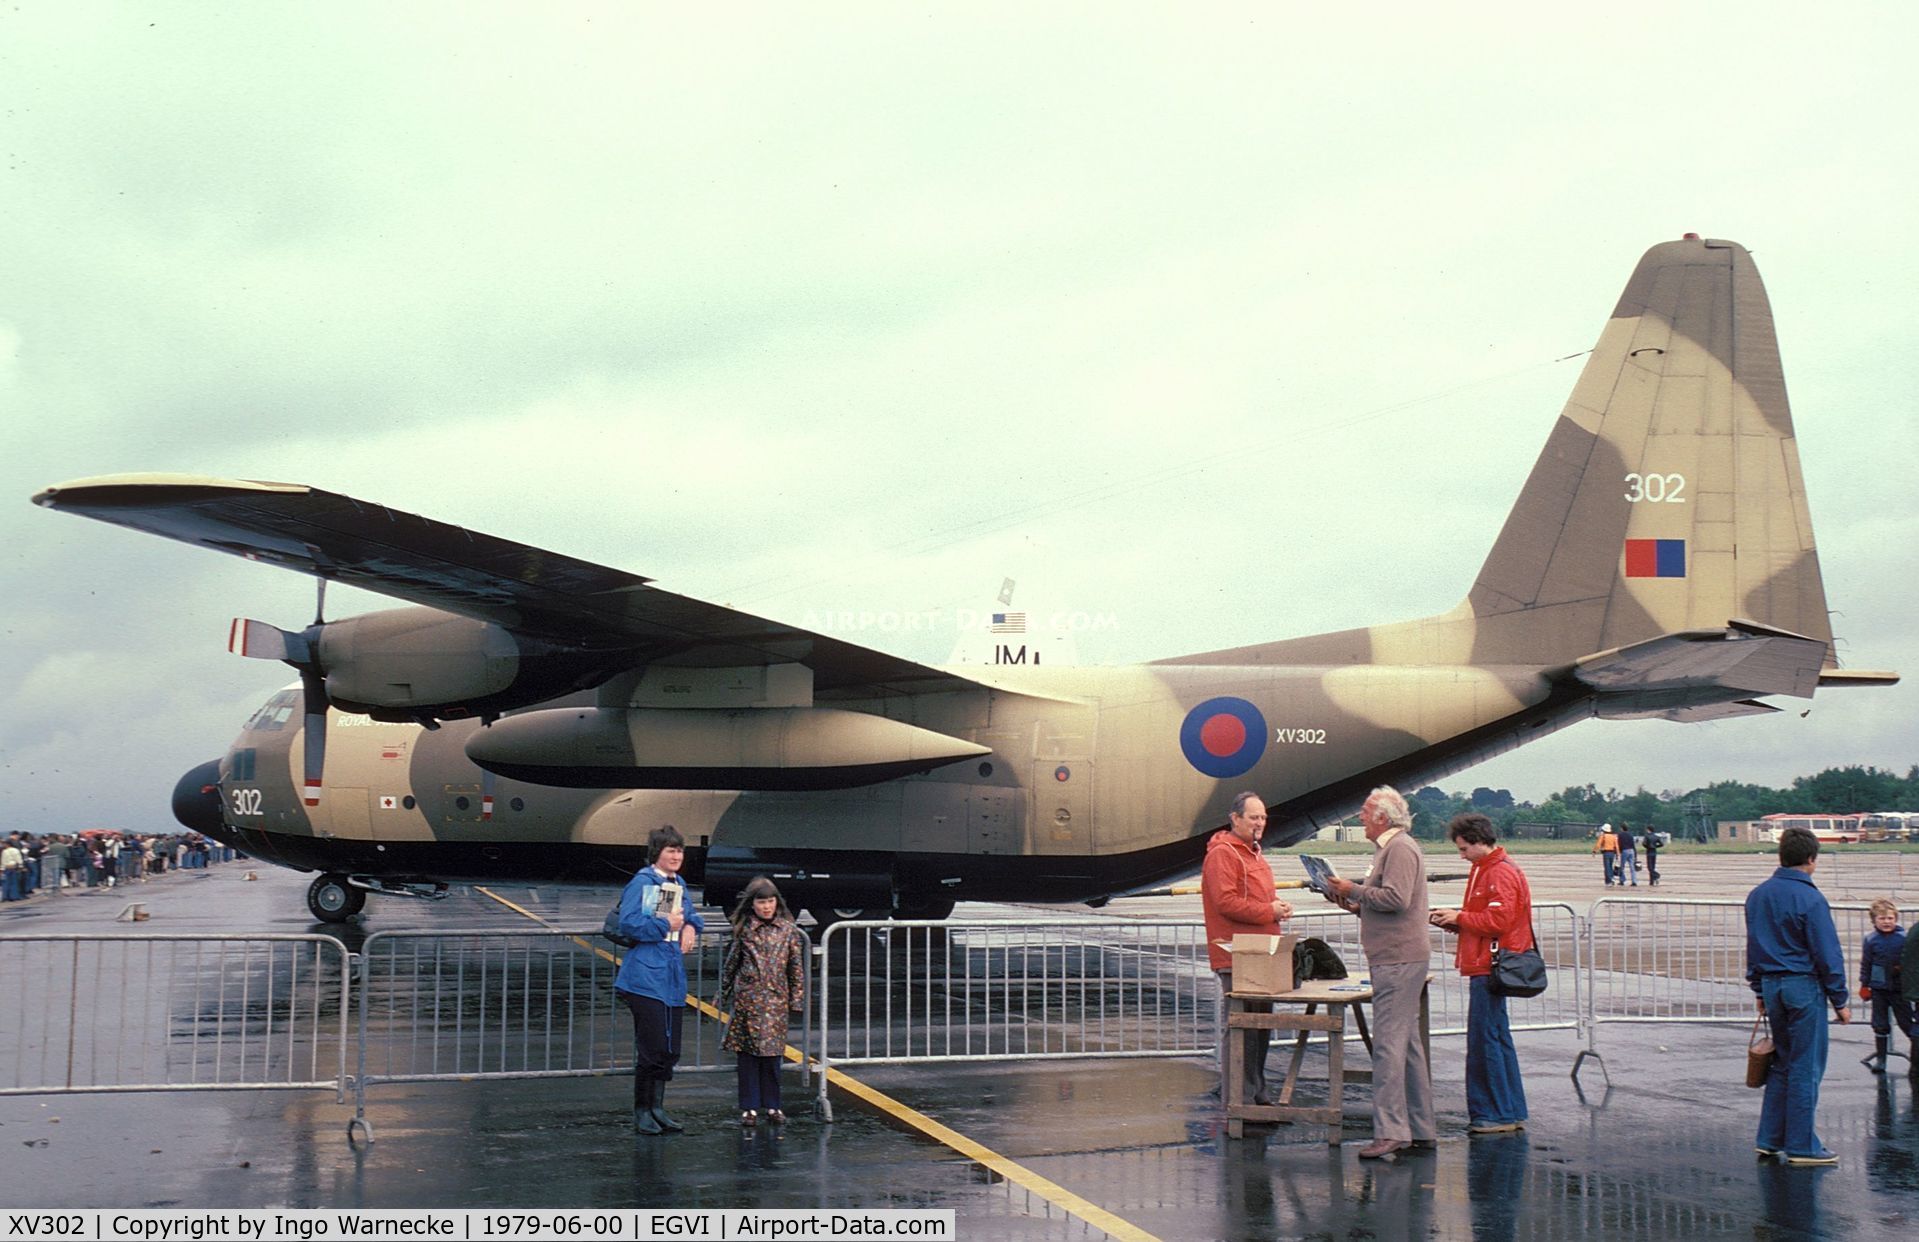 XV302, Lockheed C-130K Hercules C.1 C/N 382-4270, Lockheed C-130K Hercules C1 of the RAF at the 1979 International Air Tattoo, Greenham Common